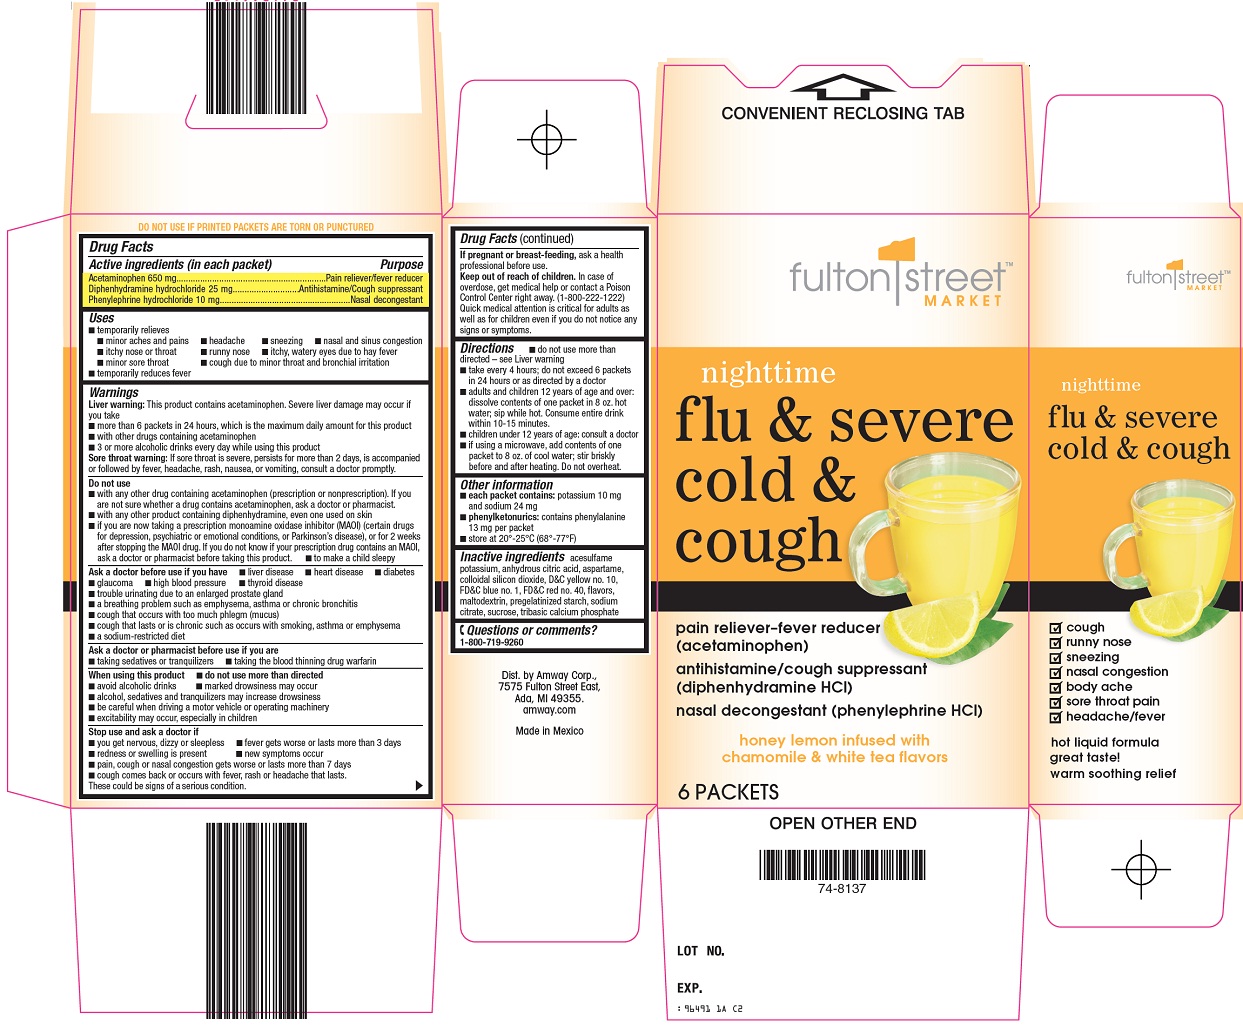 NightTime Flu & Severe Cold & Cough Carton Image